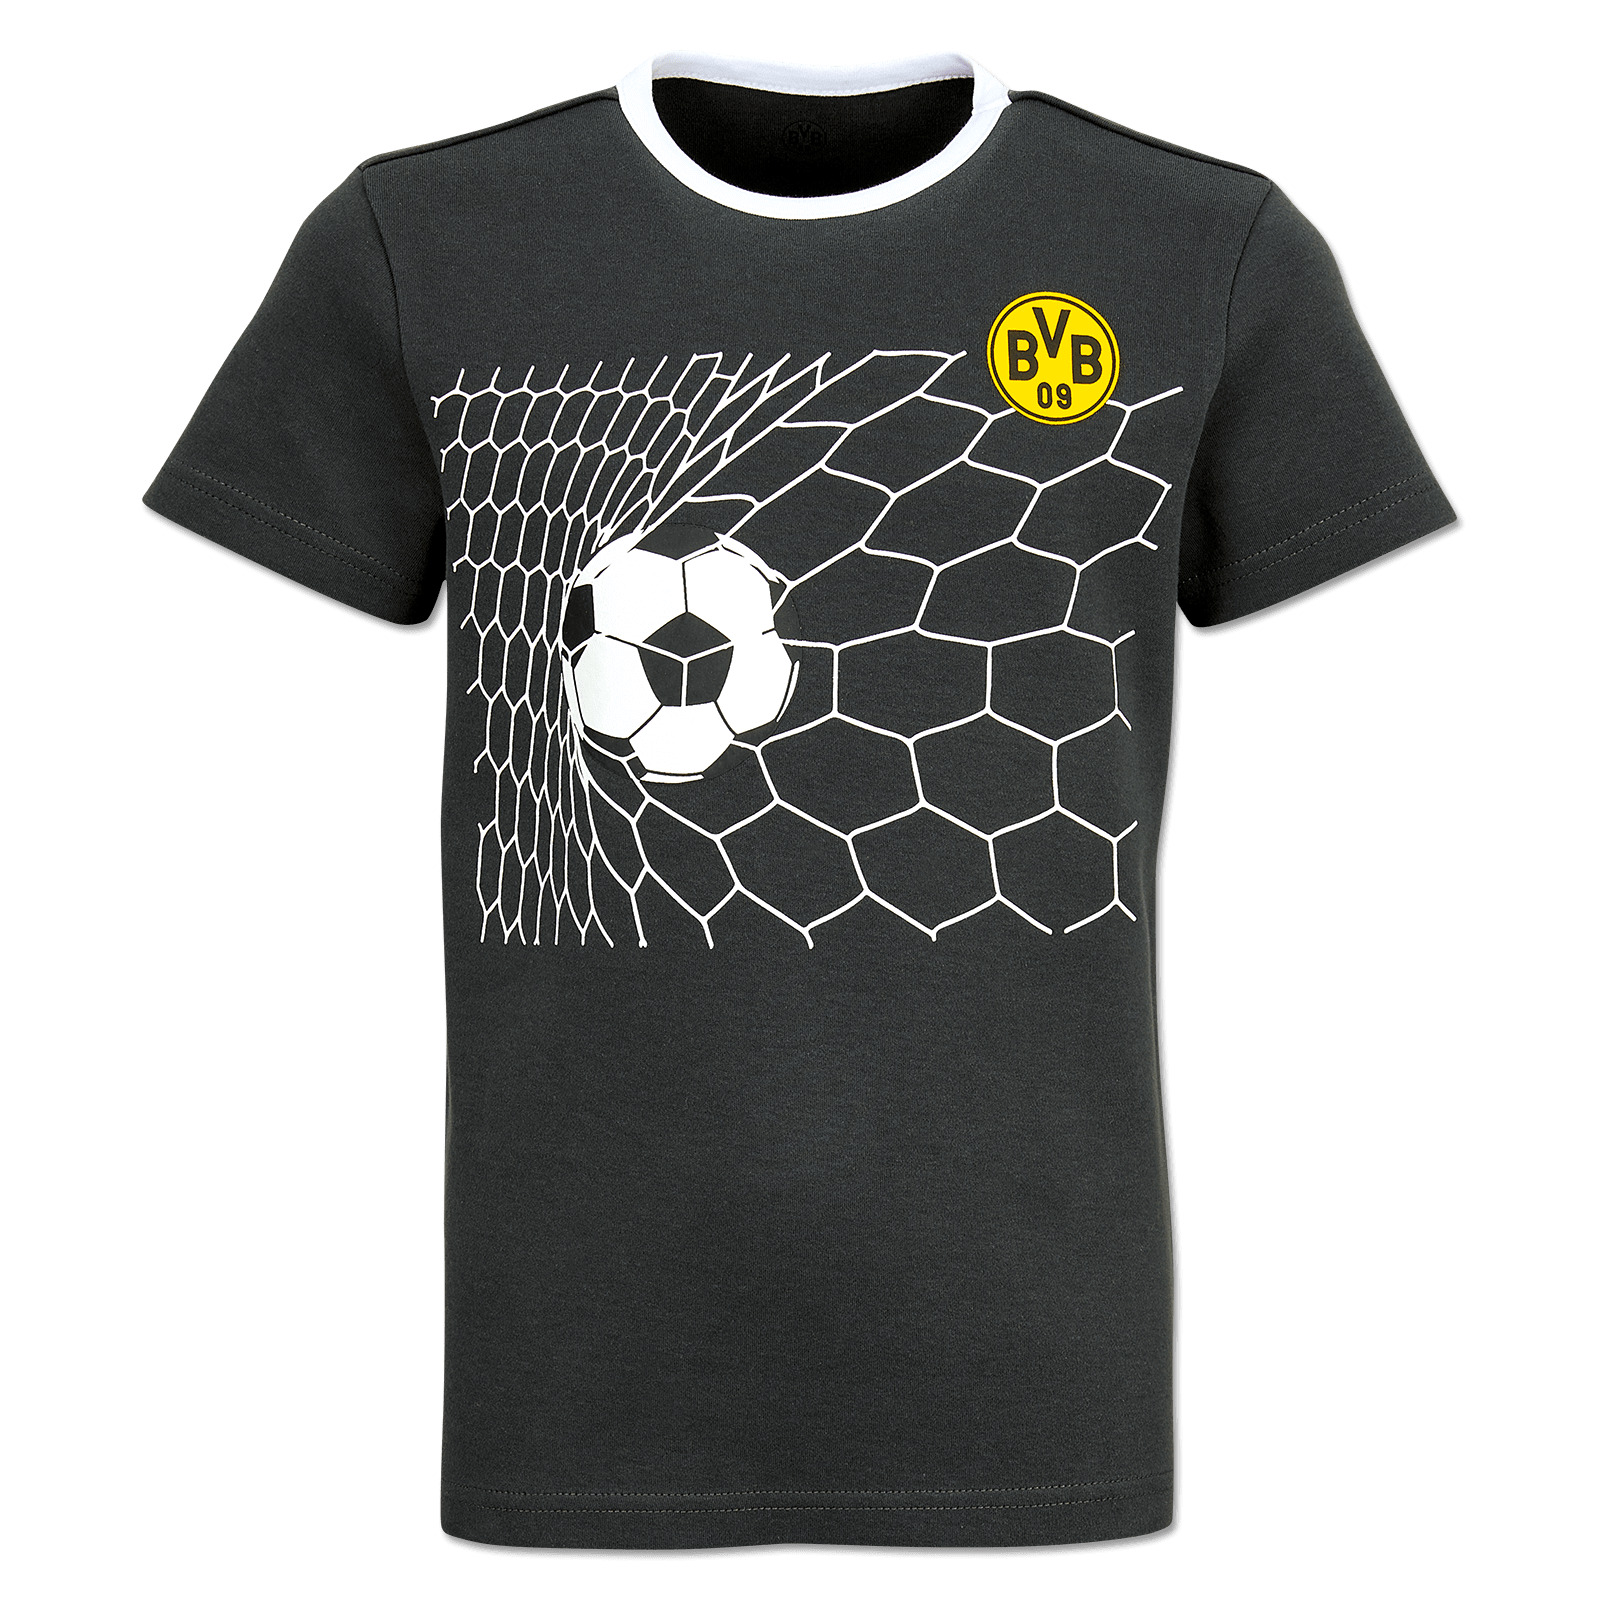 Borussia Dortmund BVB 09 tričko detské - SKLADOM